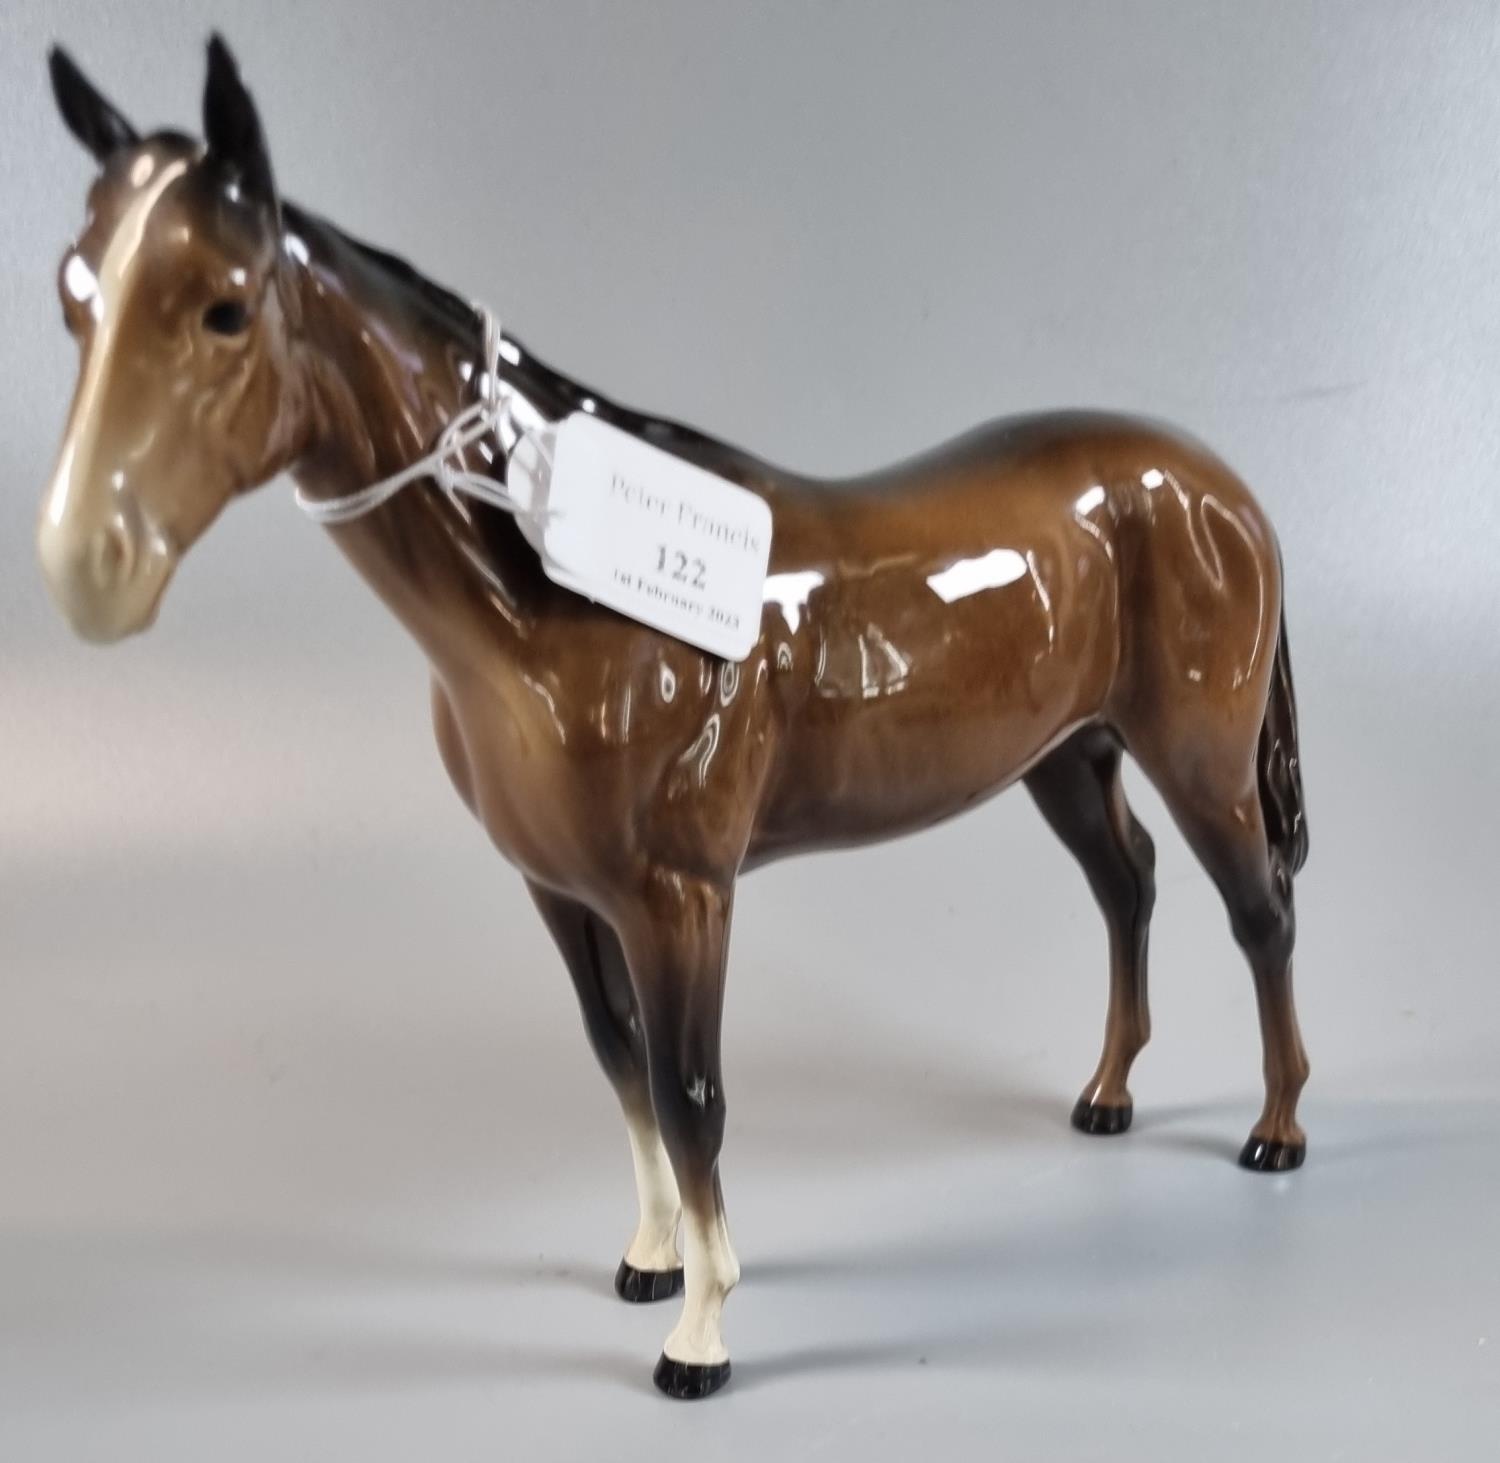 Beswick racehorse, brown gloss finish. (B.P. 21% + VAT)